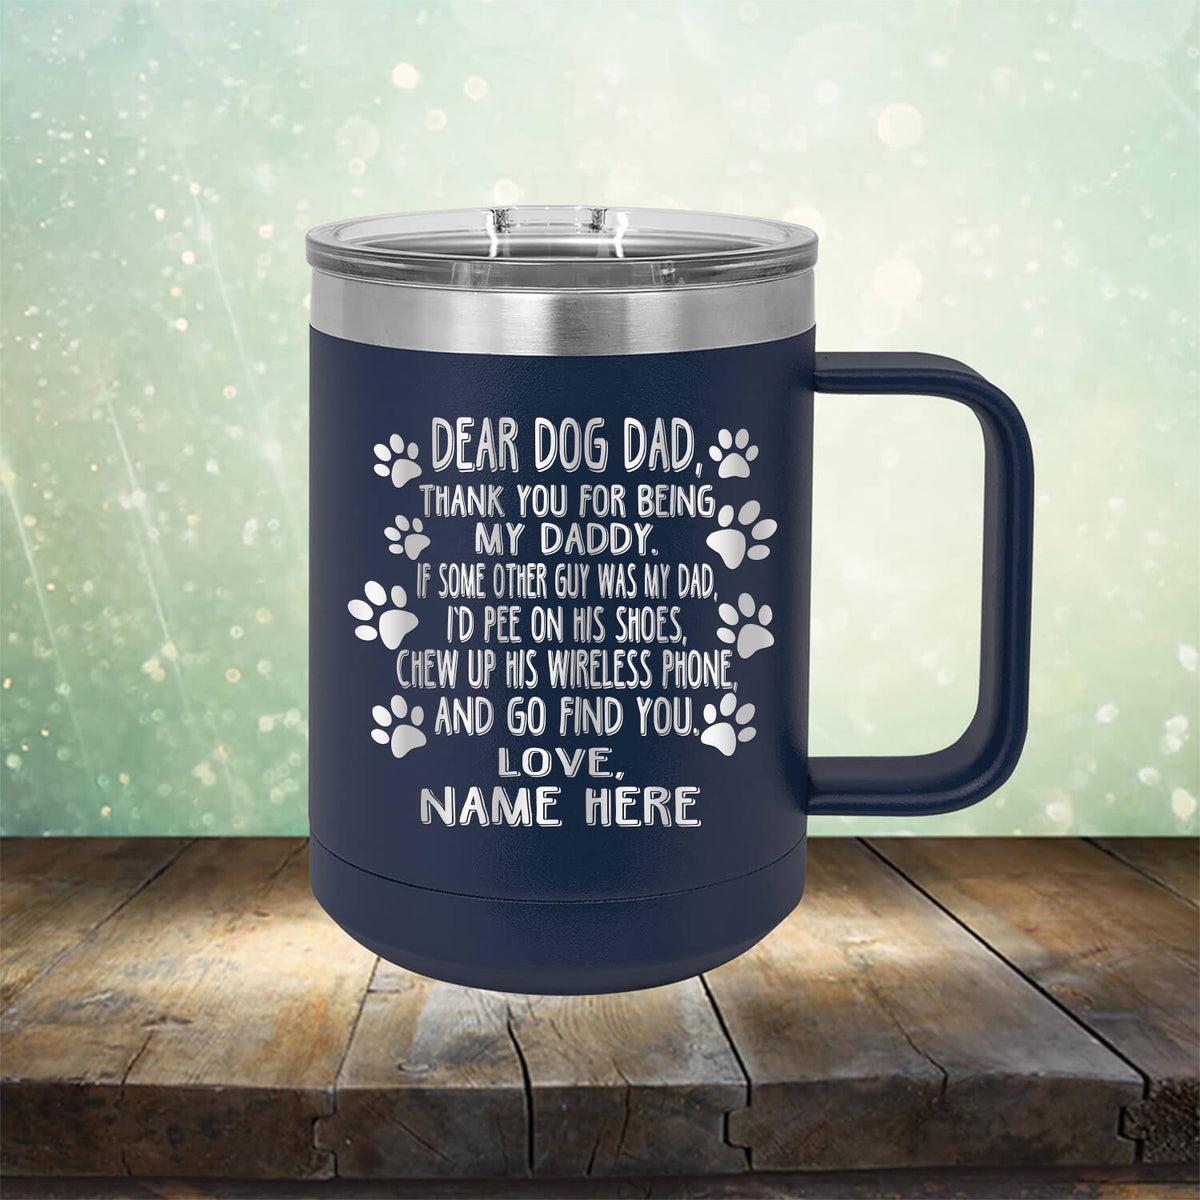 Dear Dog Dad Thank You For Being My Daddy - Laser Etched Tumbler Mug